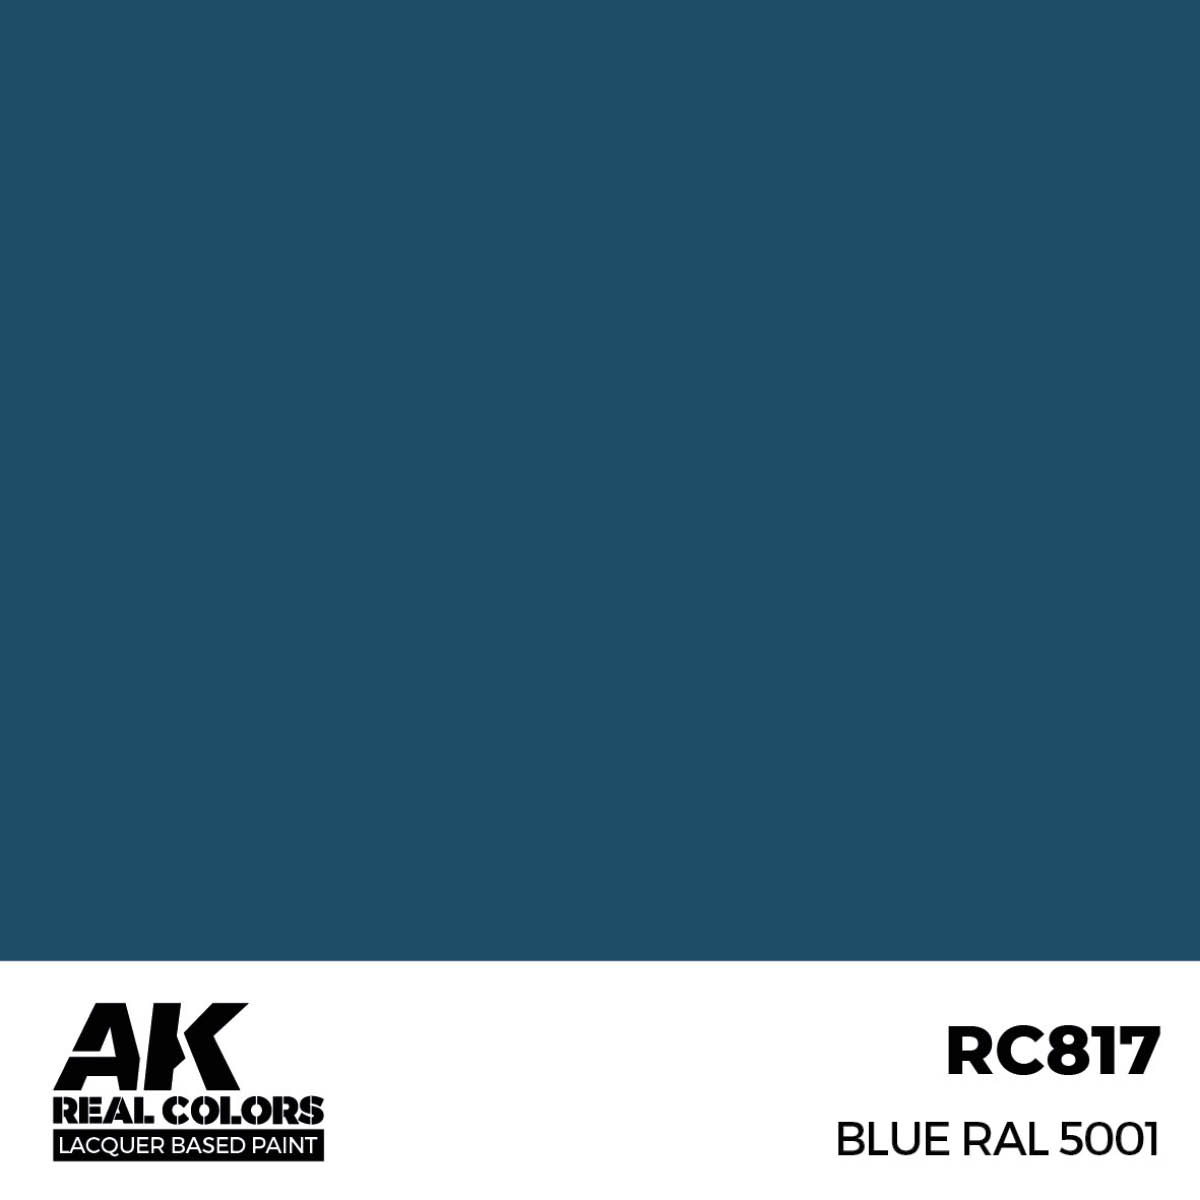 Blue RAL 5001